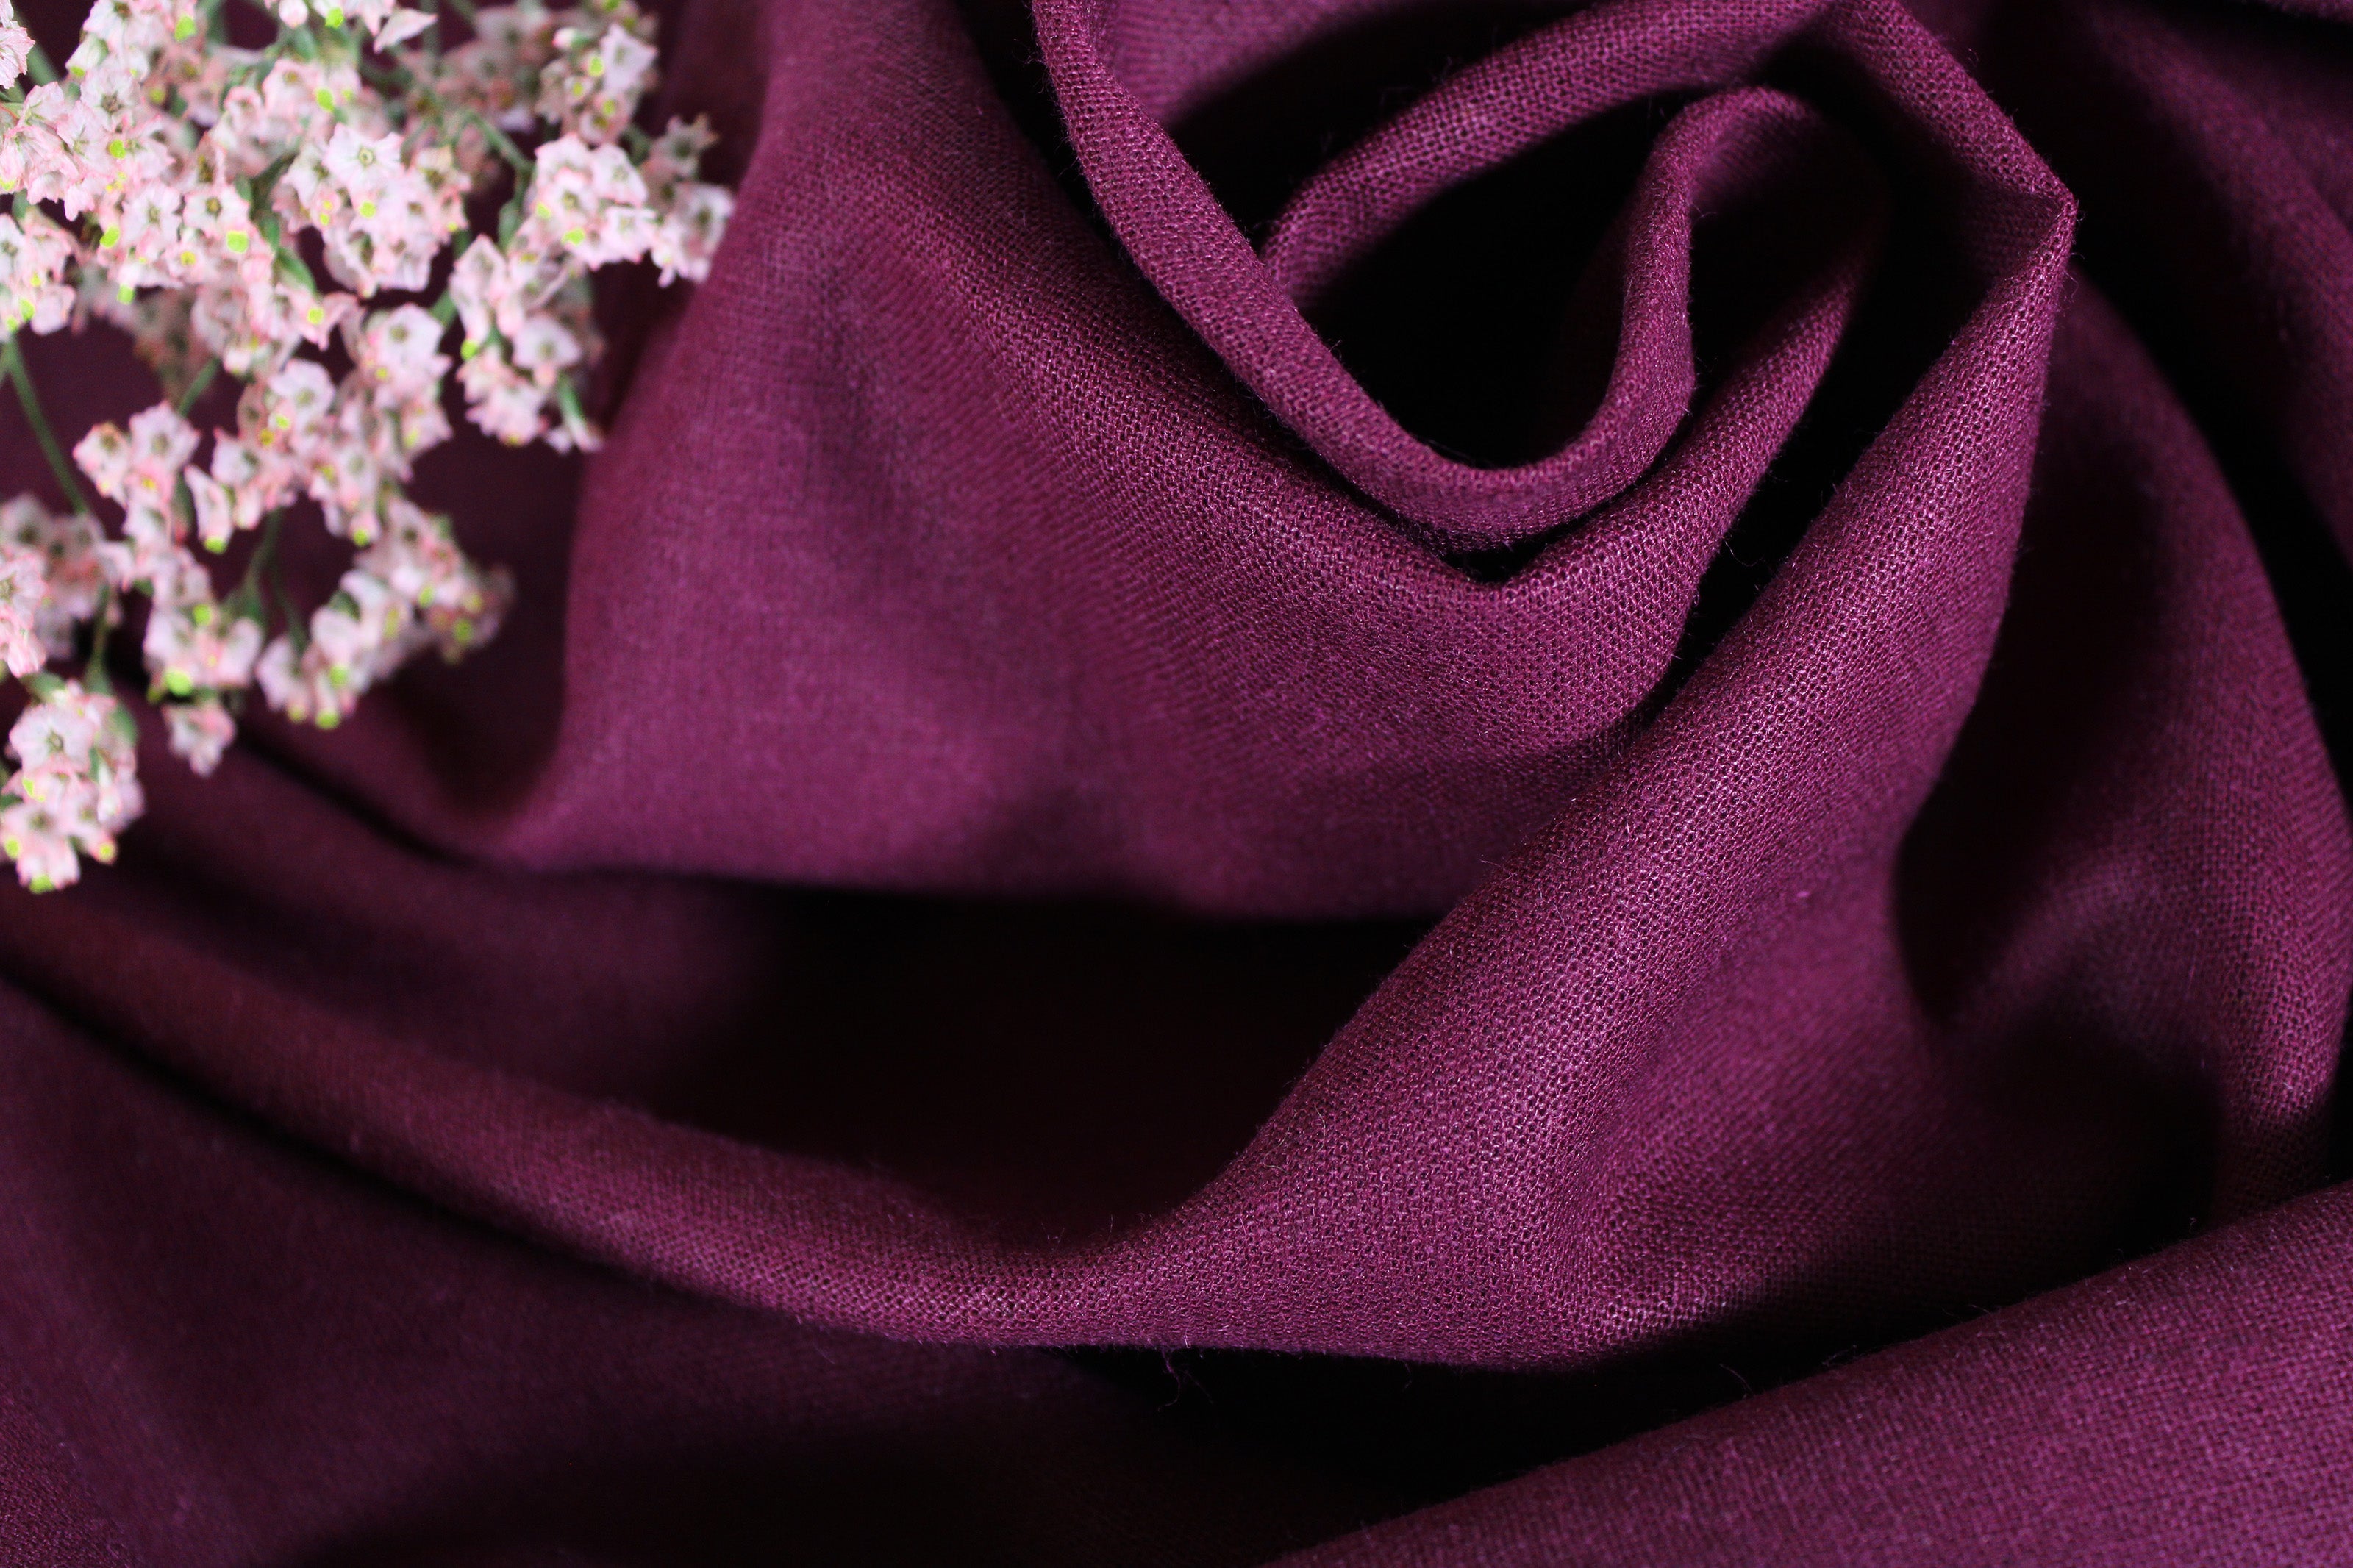 NEW LINEN FABRIC COLLECTION!!! / 100% Linen Fabric by the Yard / Dark purple Linen Fabric / Buy Linen Online